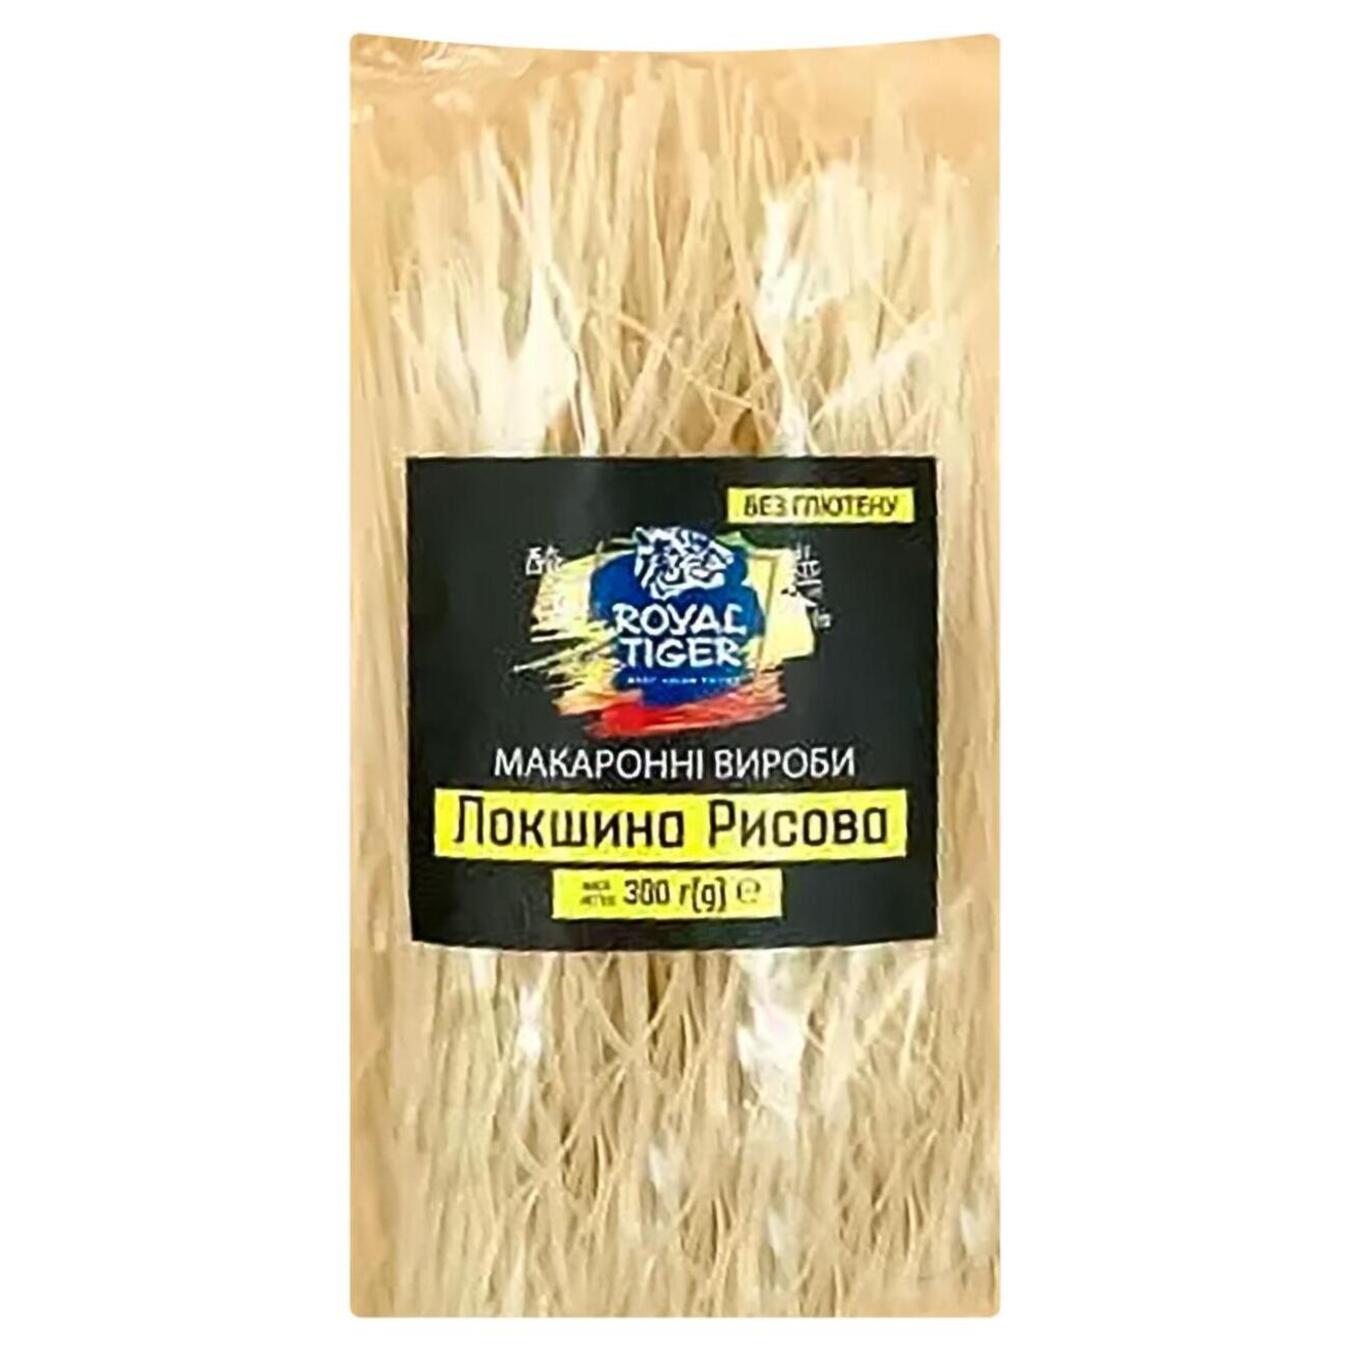 Pasta products Royal TigerI Rice noodles 300g